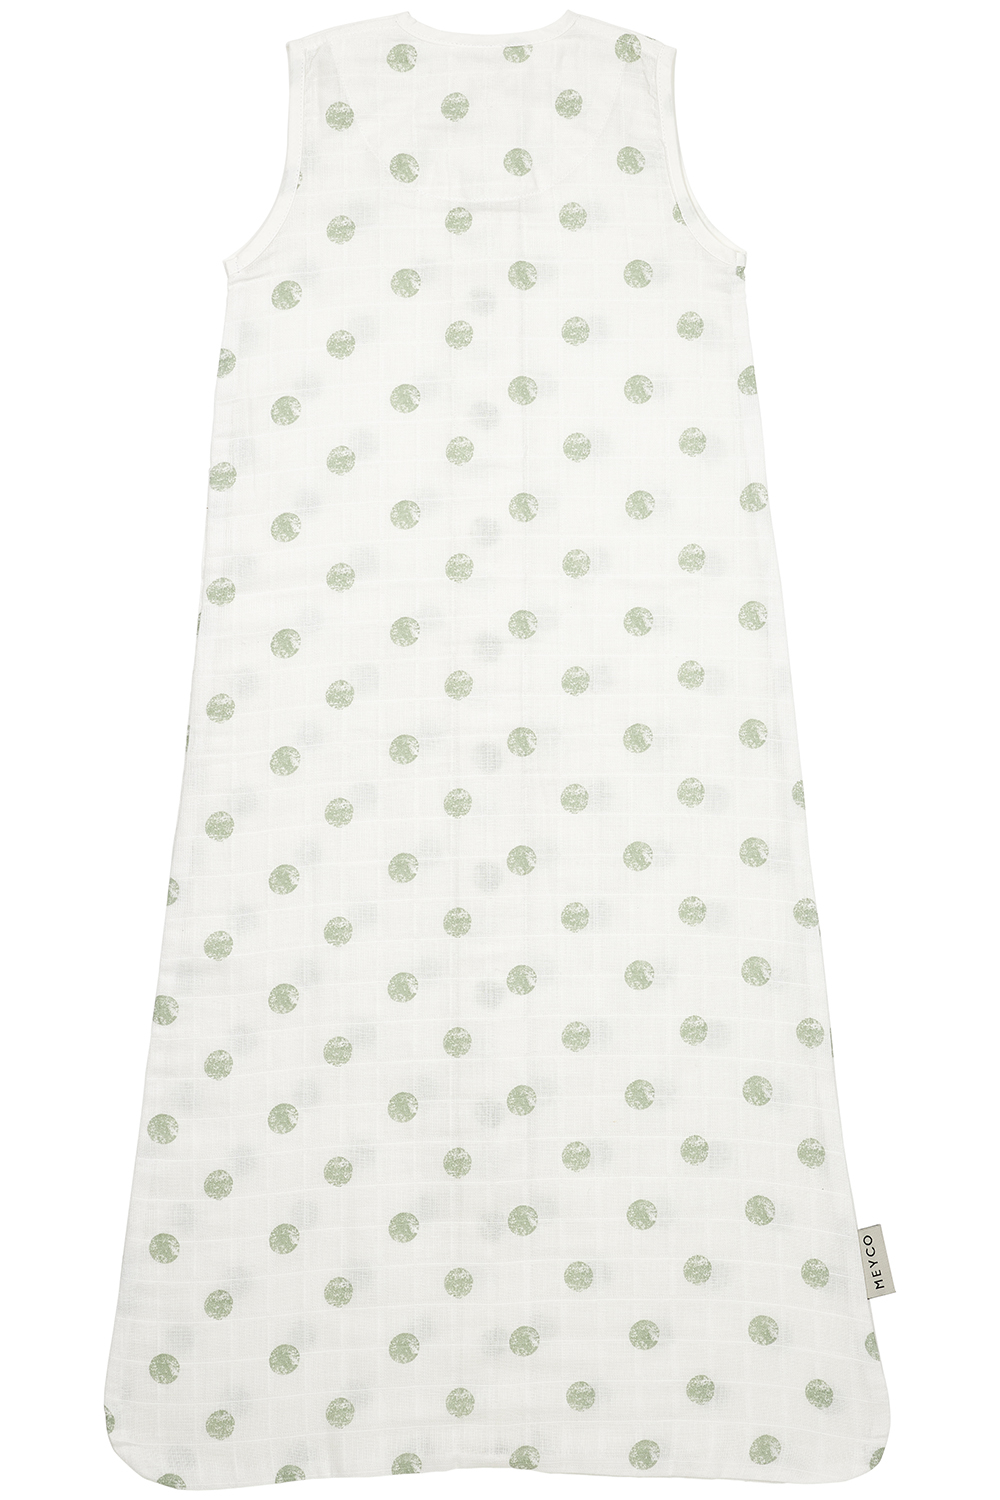 Baby zomerslaapzak hydrofiel Dots - soft green - 110cm